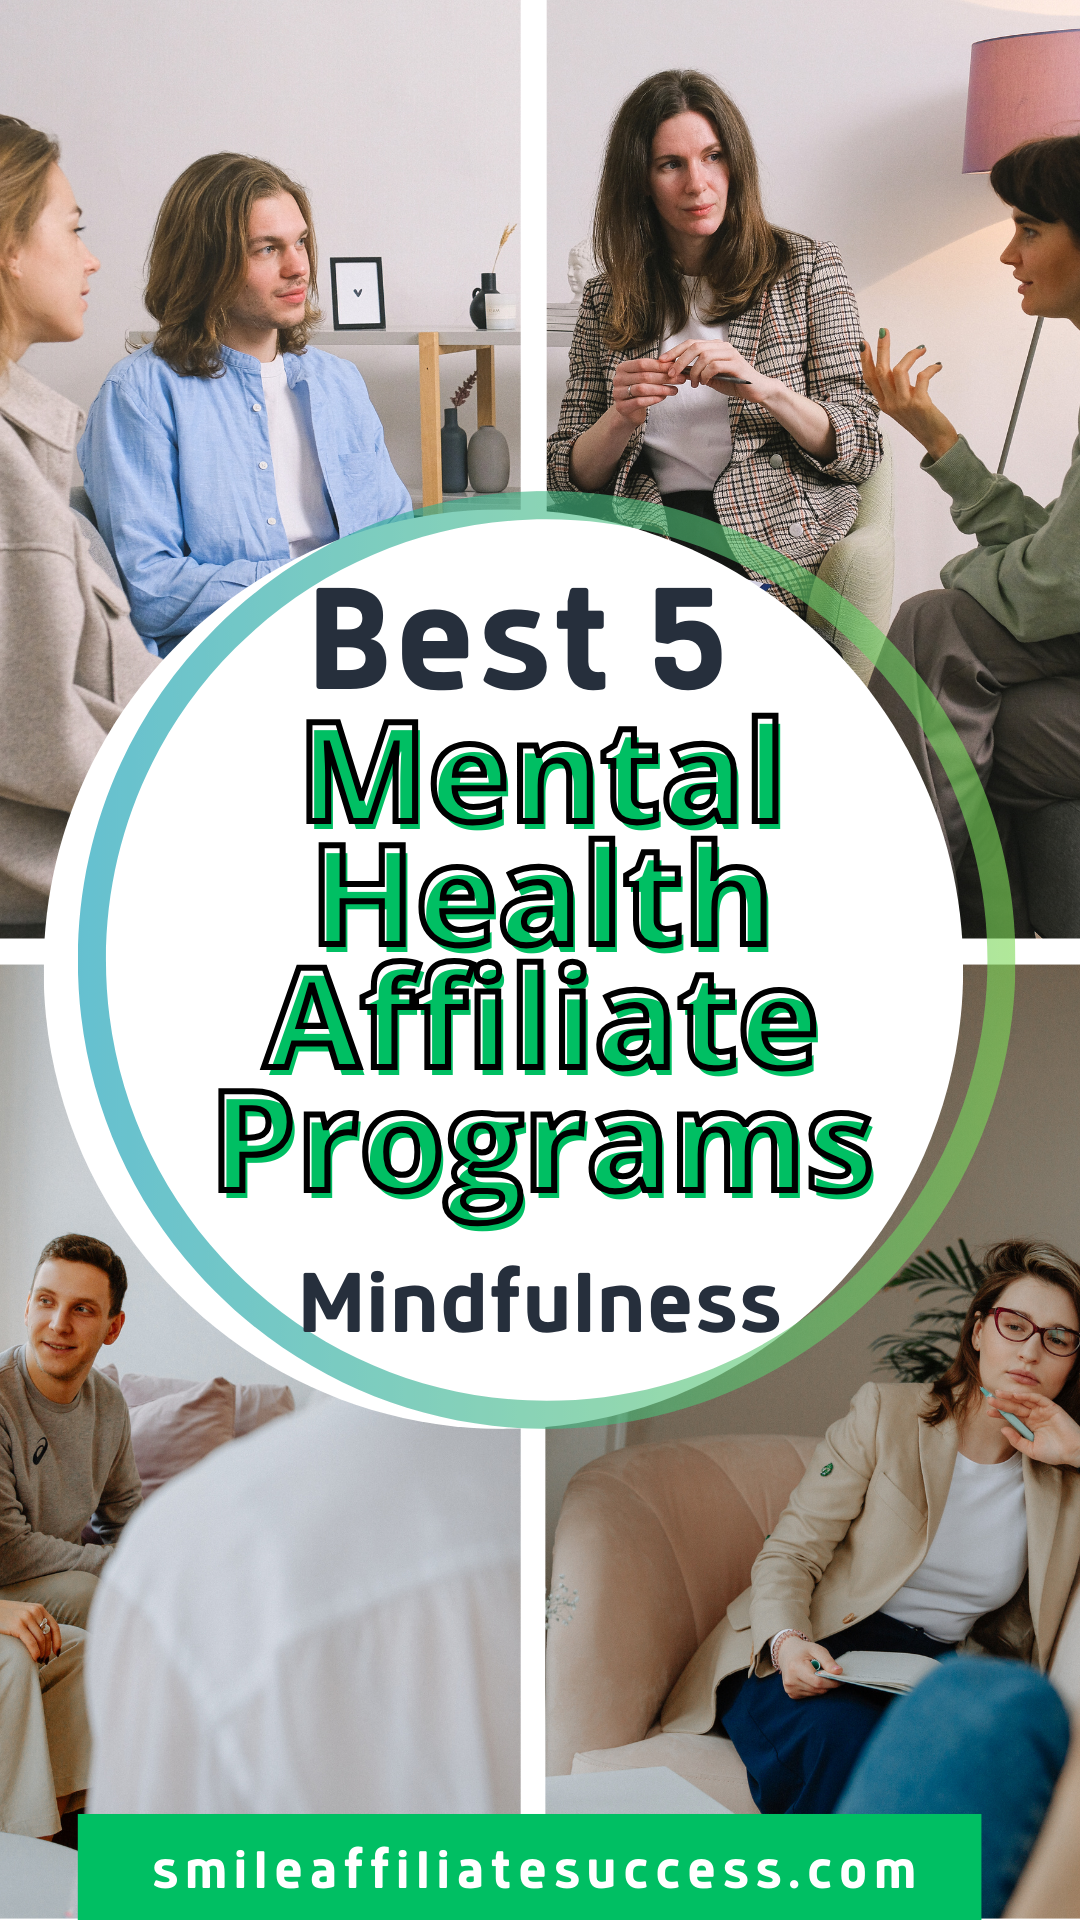 Best 5 Mental Health Affiliate Programs